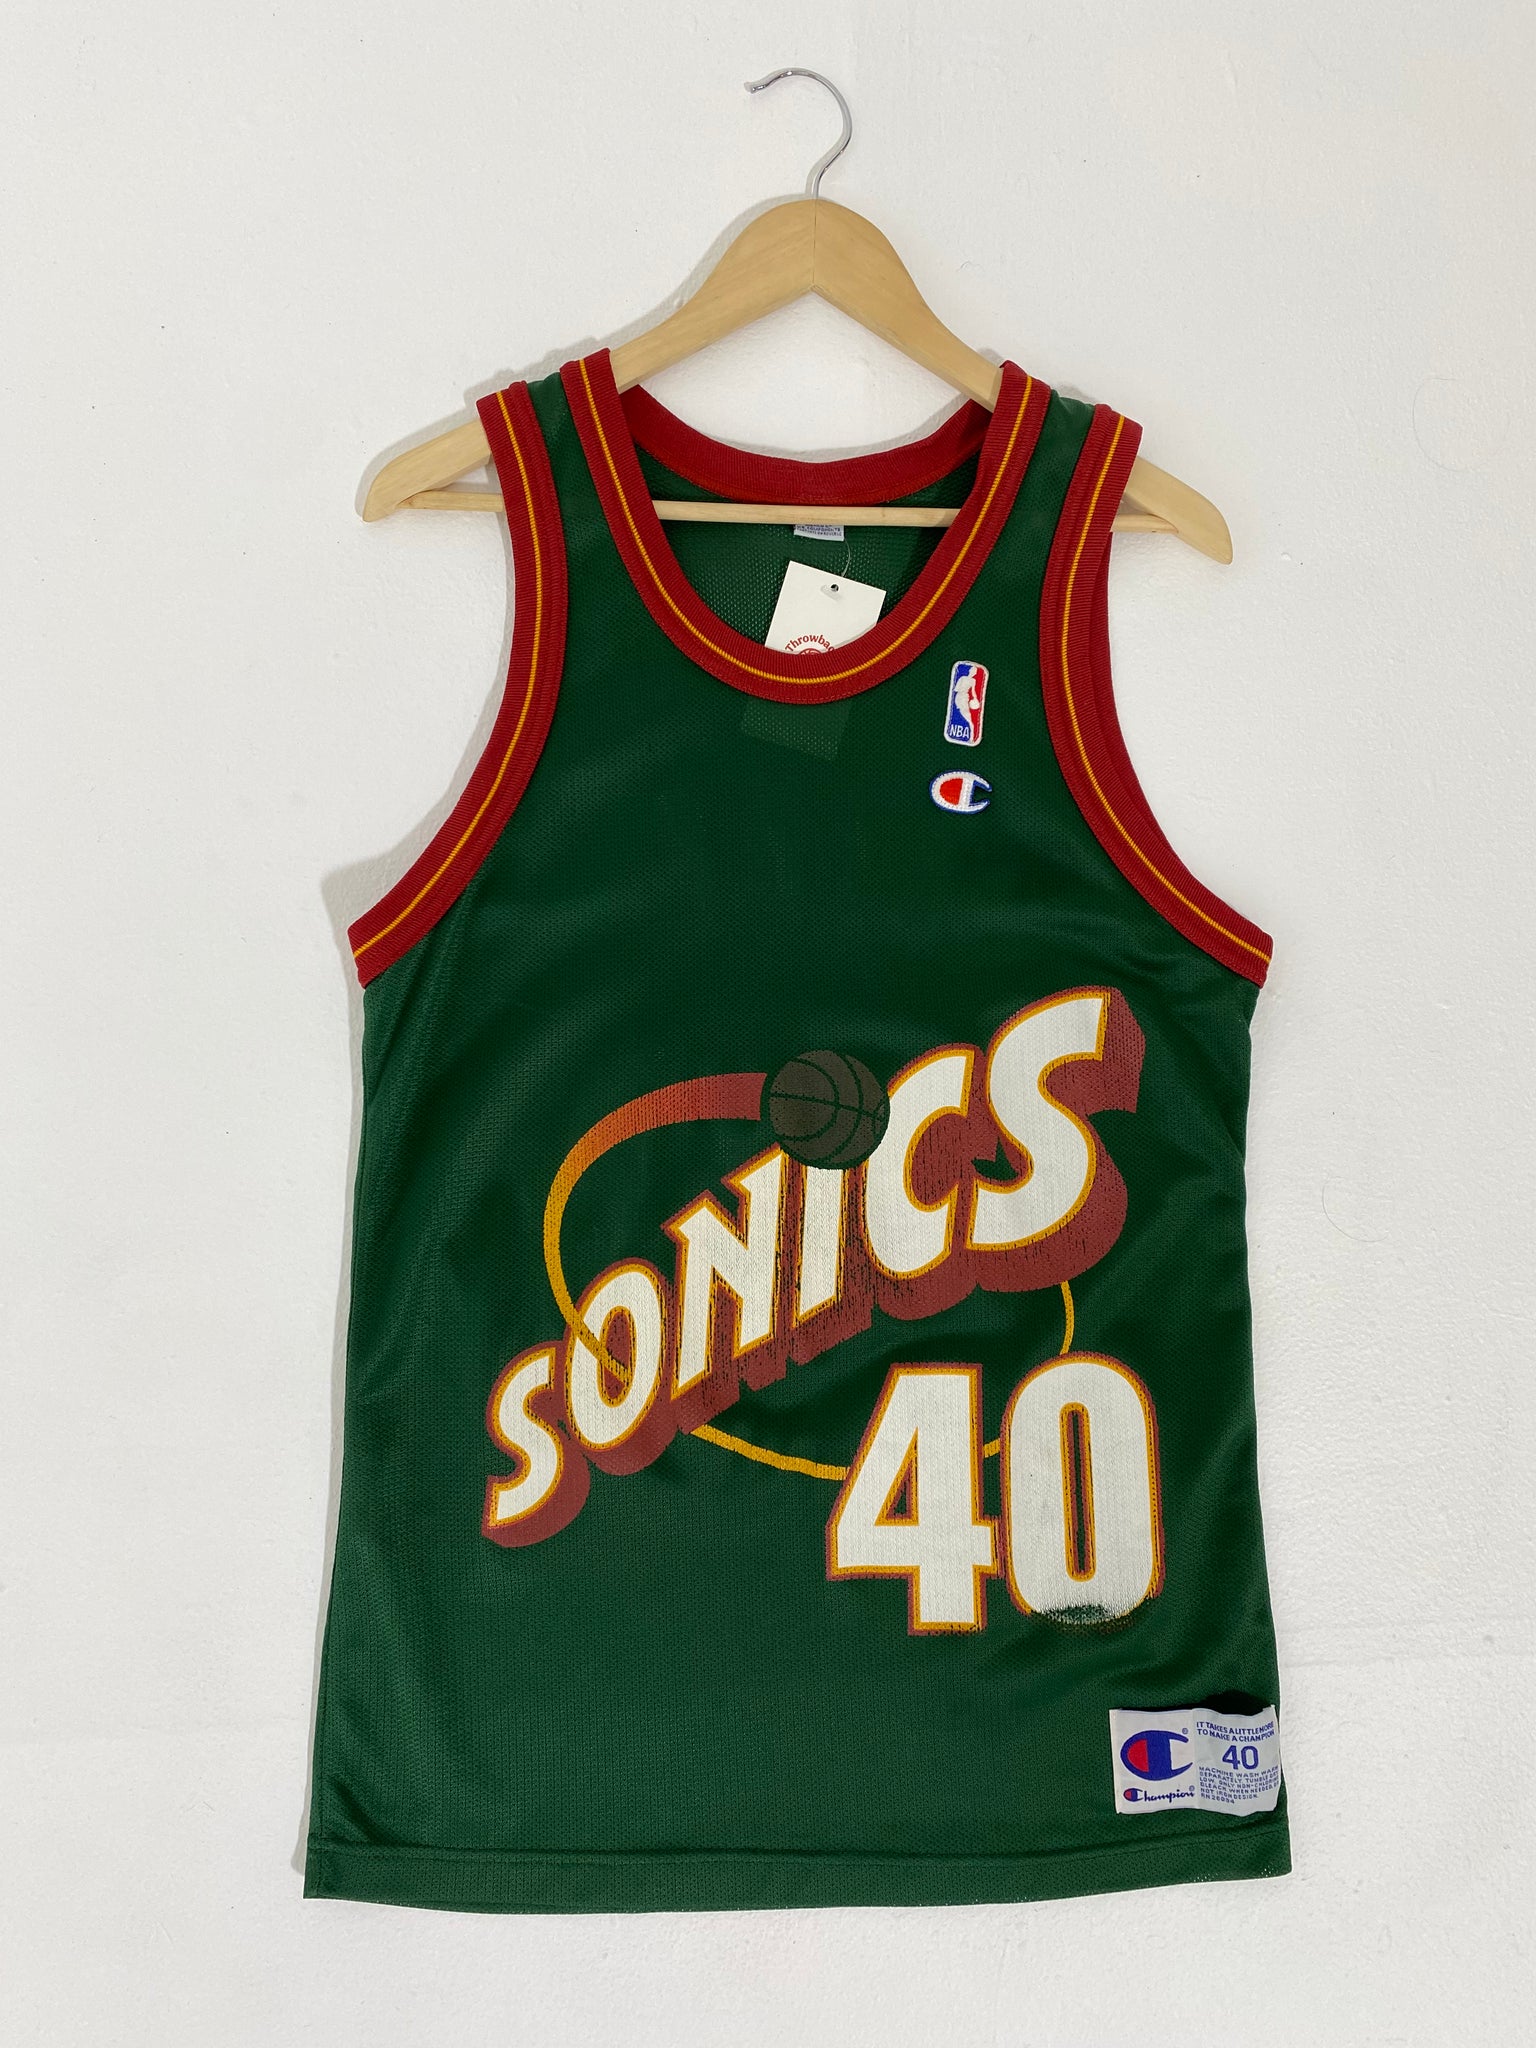 Seattle SuperSonics Vintage Jerseys, Sonics Retro Jersey